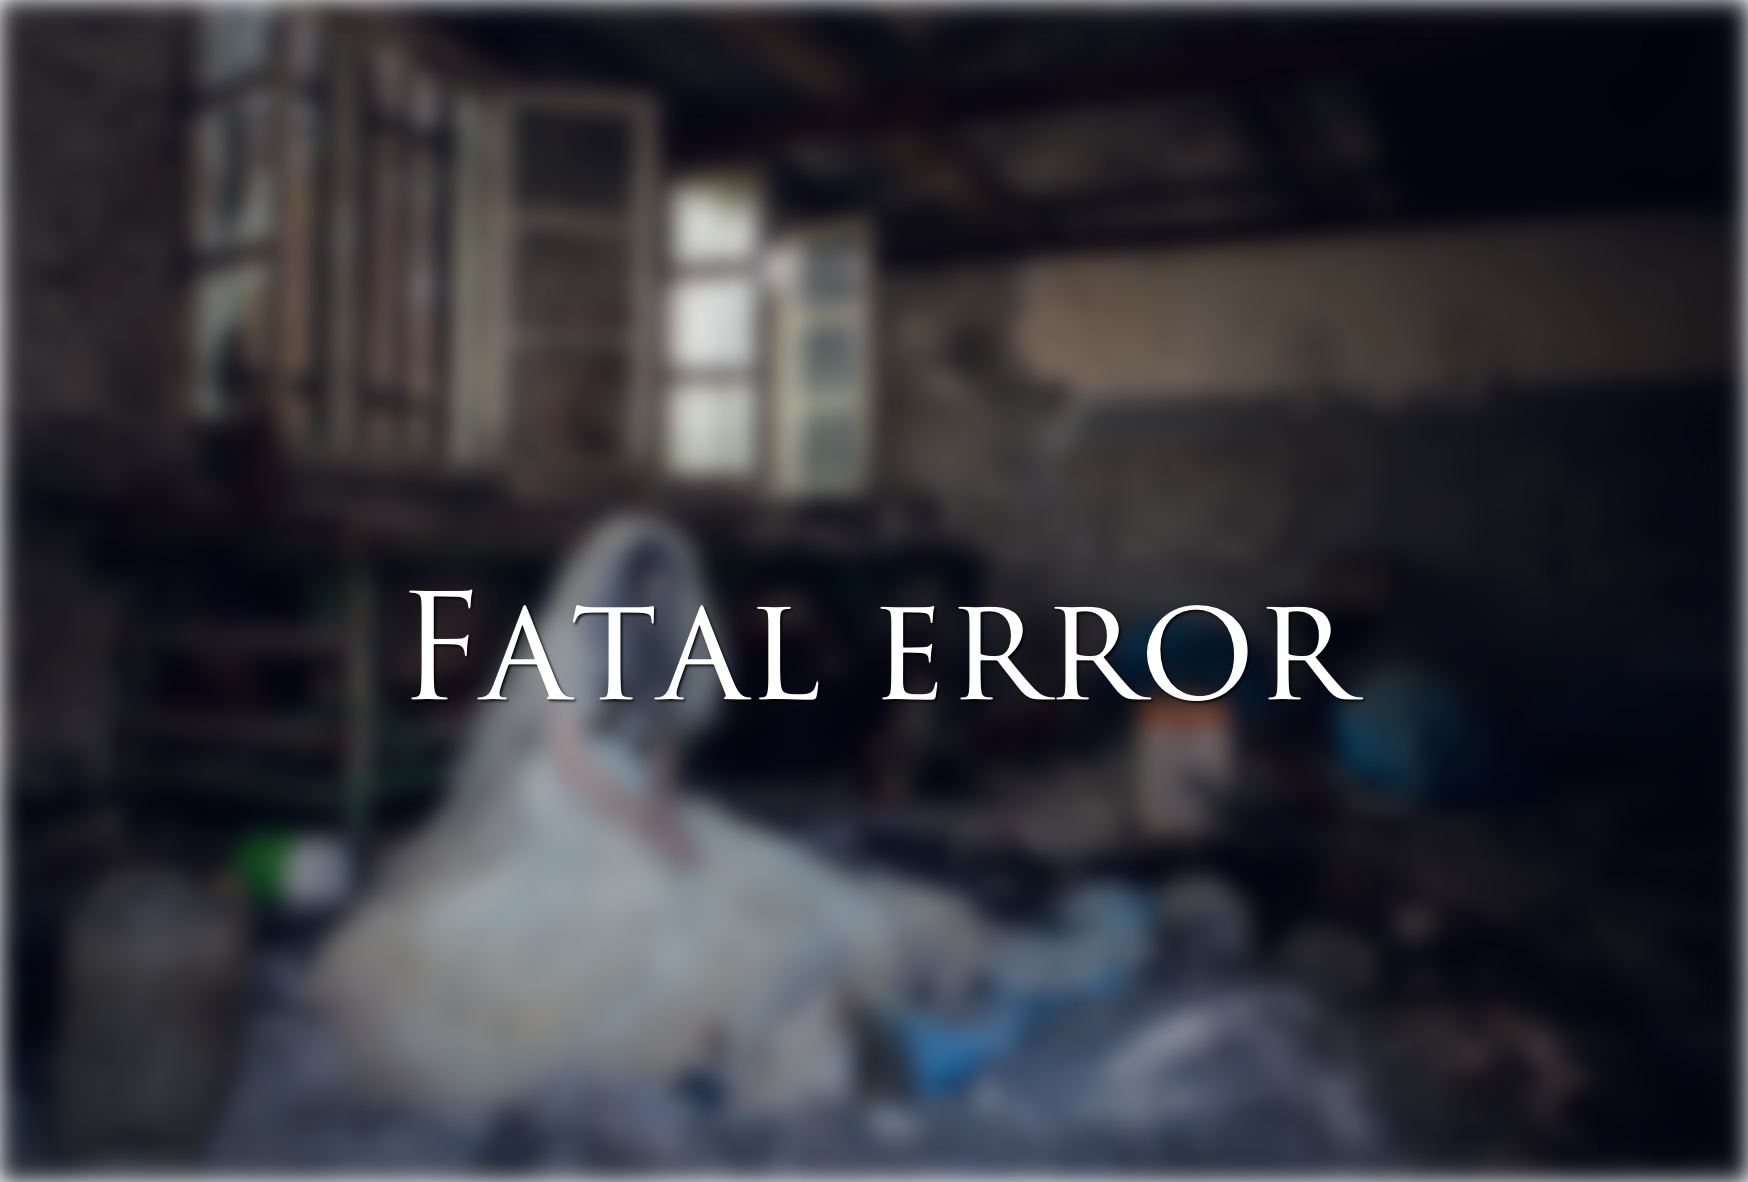 fatal error